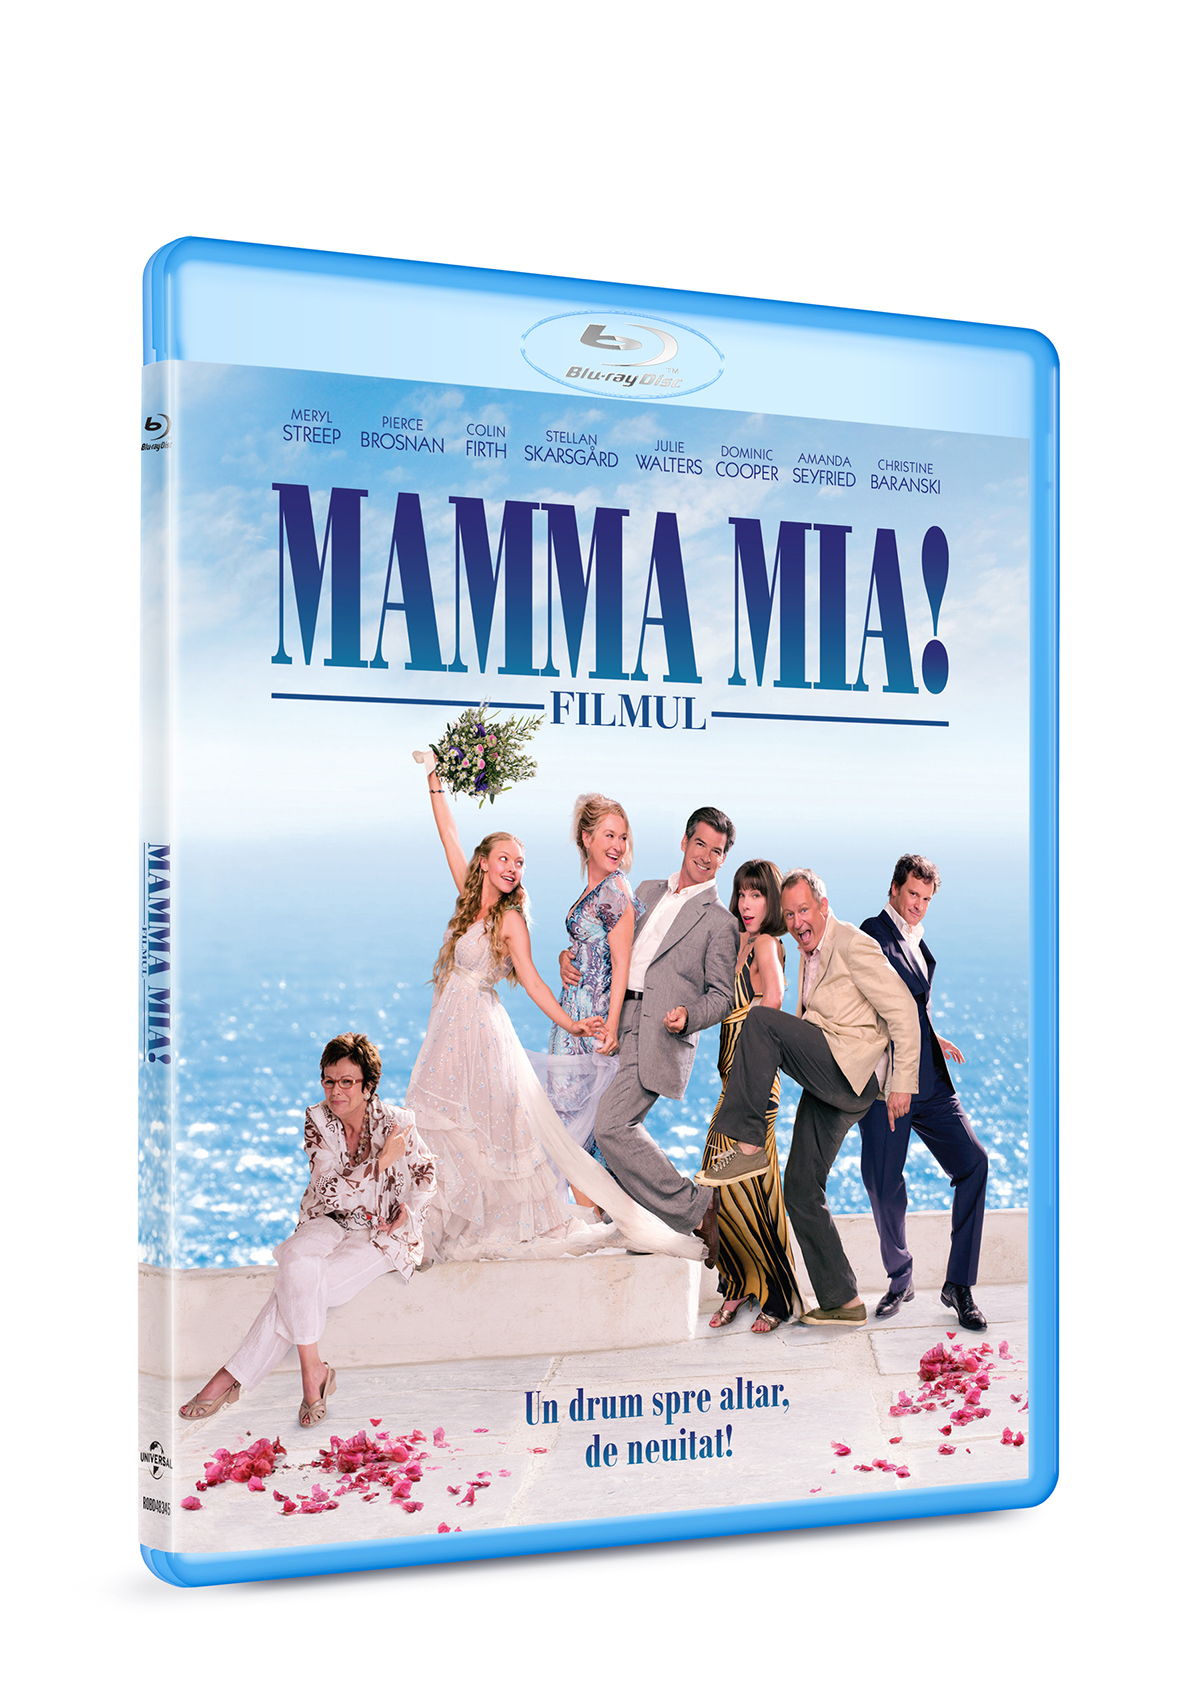 Mamma Mia! - Filmul (Blu Ray Disc) / Mamma Mia! - The Movie | Phyllida Lloyd